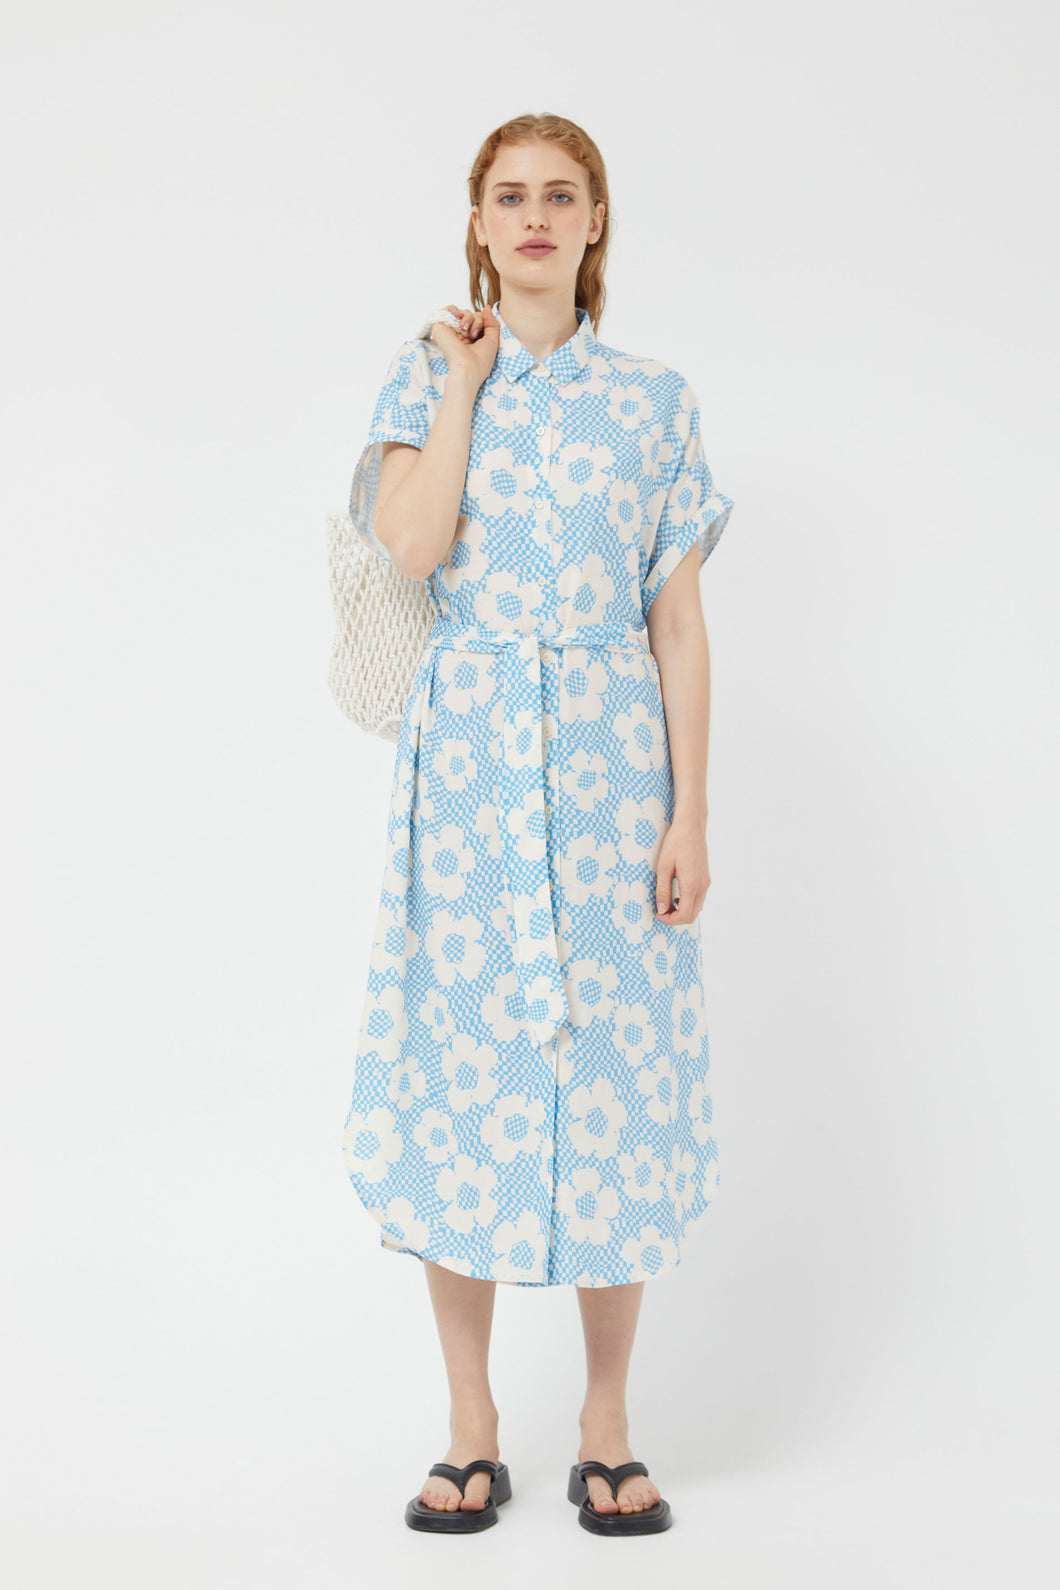 Compania Fantastica Blue Floral Print Dress